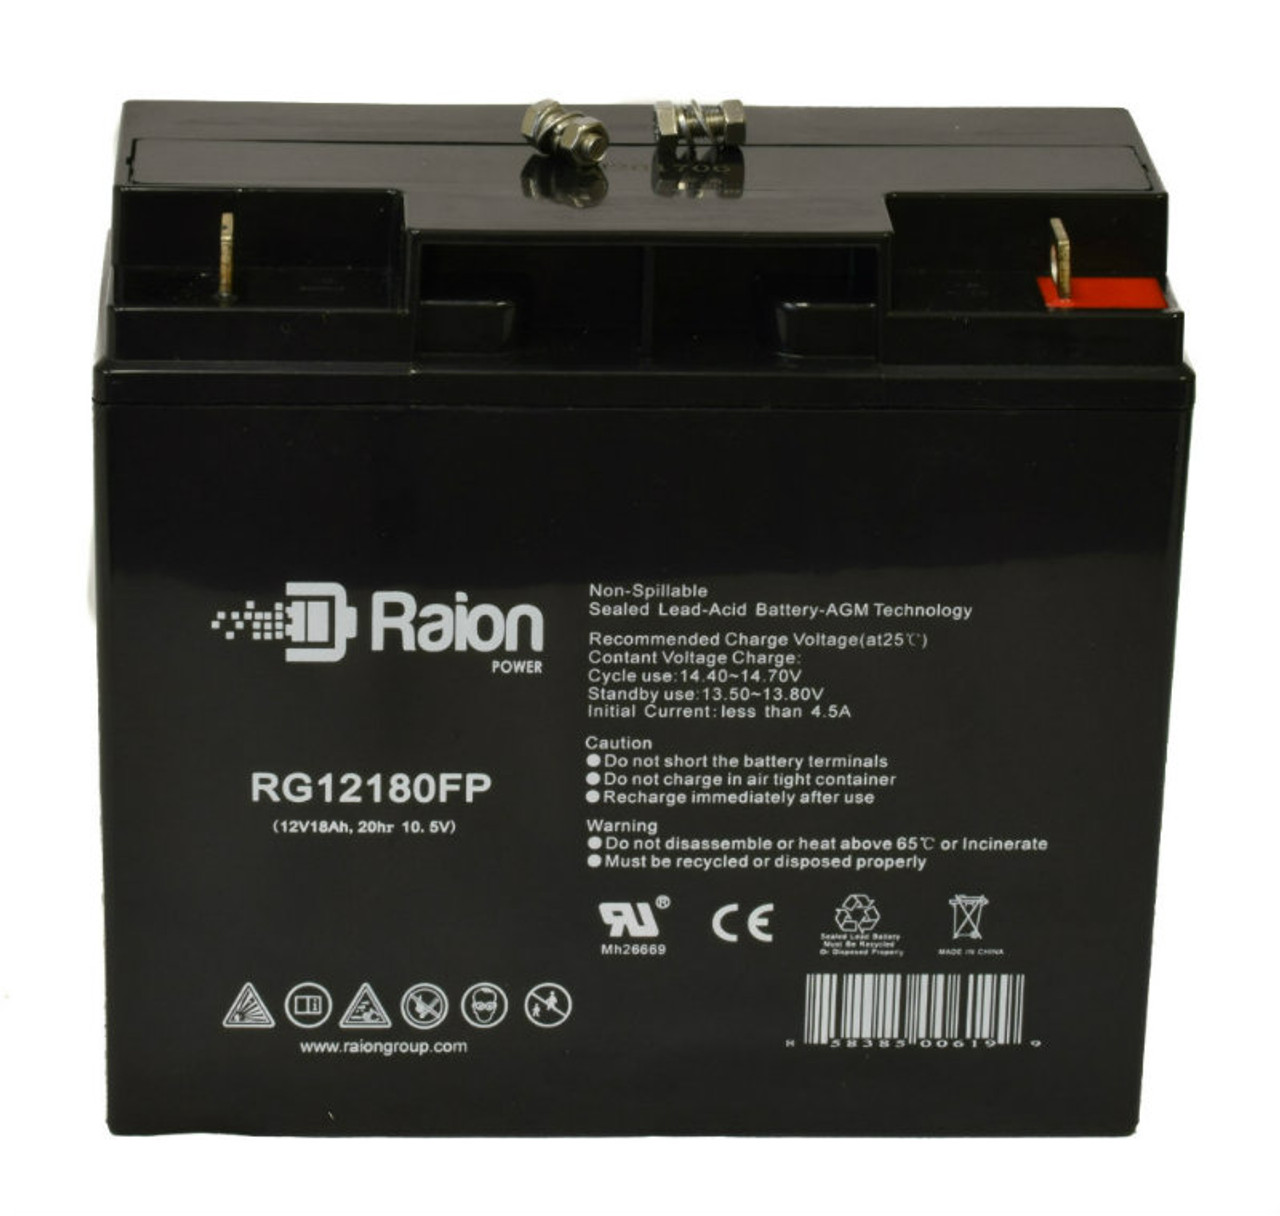 Raion Power RG12180FP 12V 18Ah Lead Acid Battery for Voltmax VX-12170